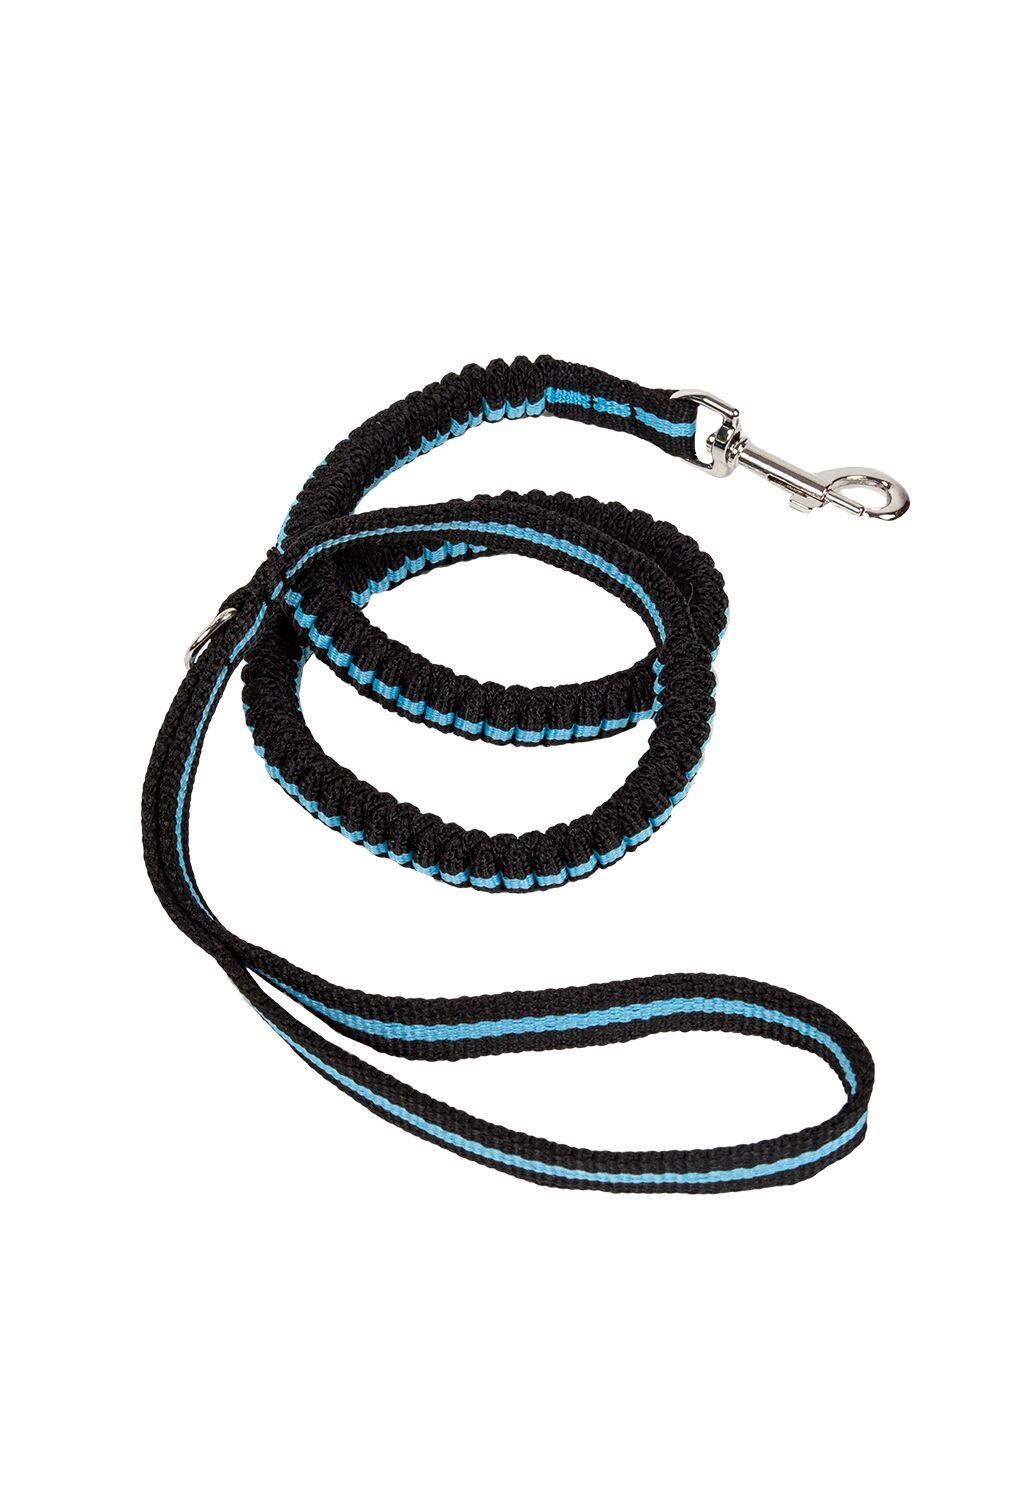 Retract A Wag Shock Absorption Dog Leash, Blue - One Size